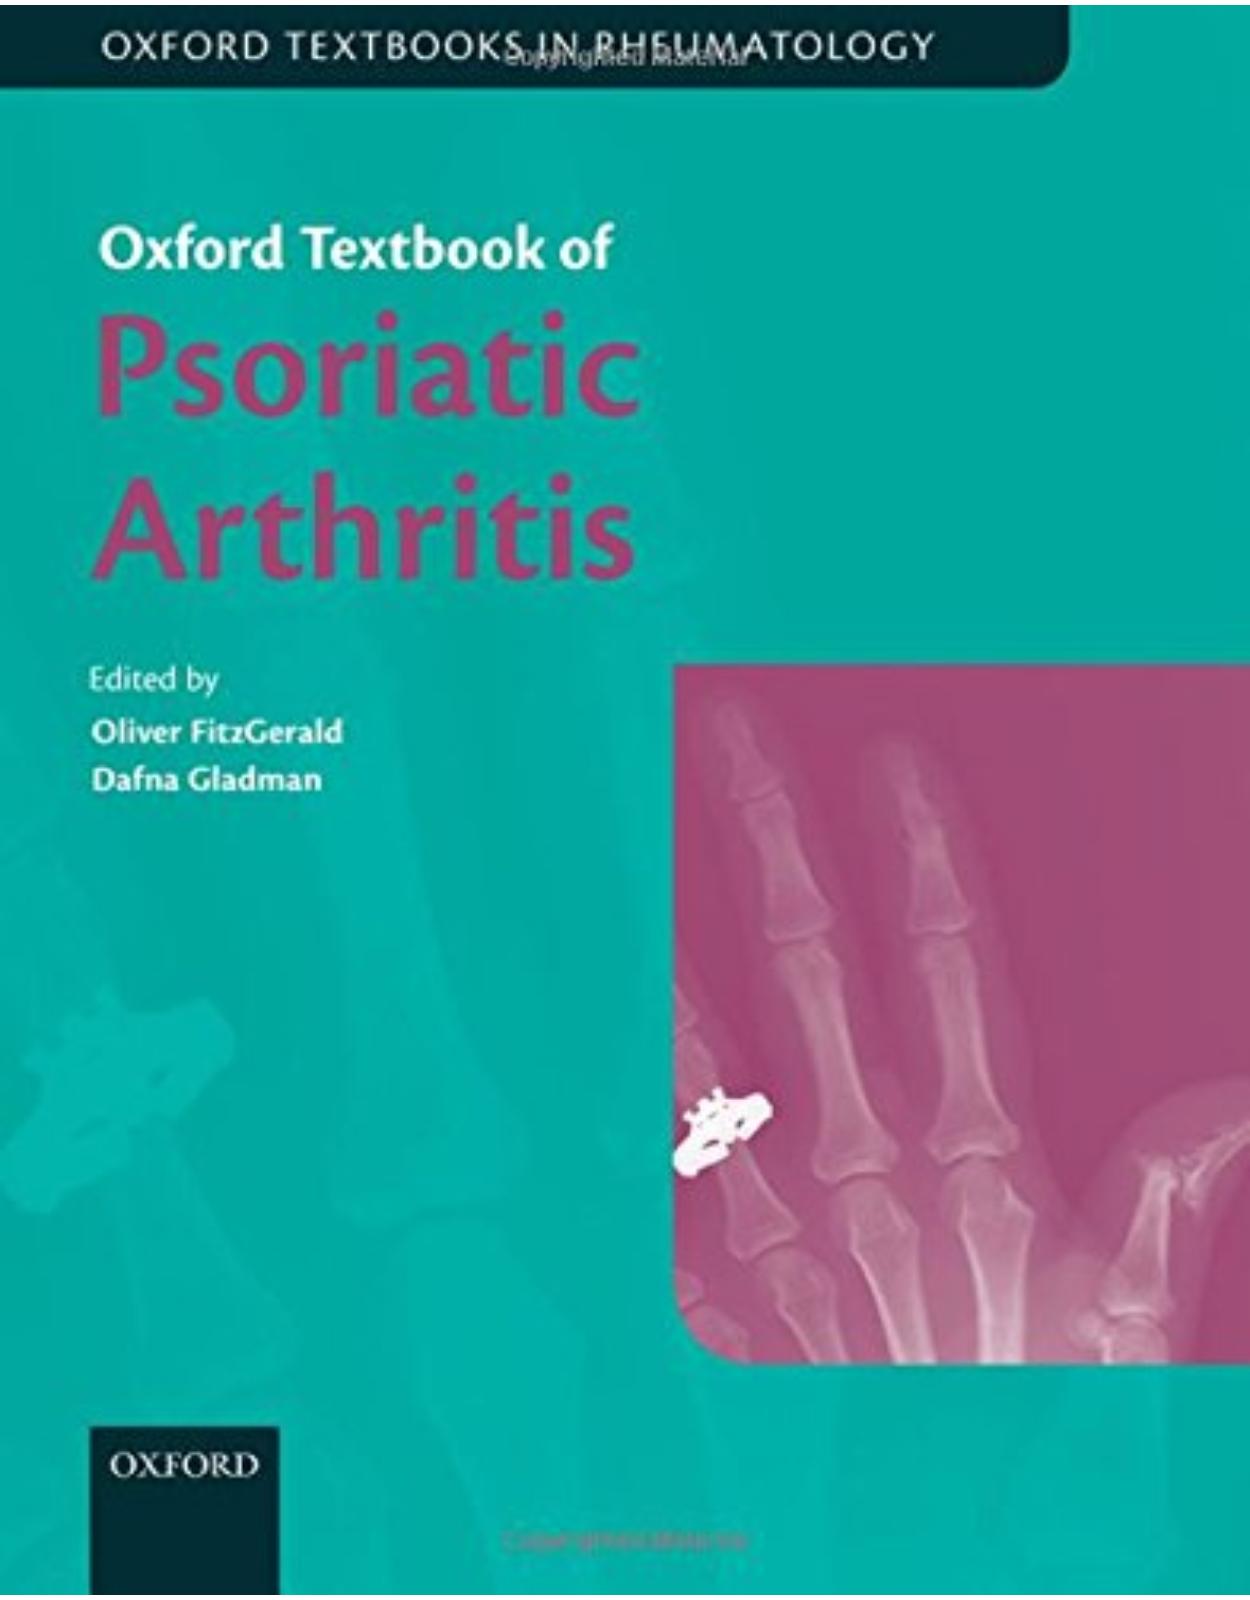 Oxford Textbook of Psoriatic Arthritis (Oxford Textbooks in Rheumatology)